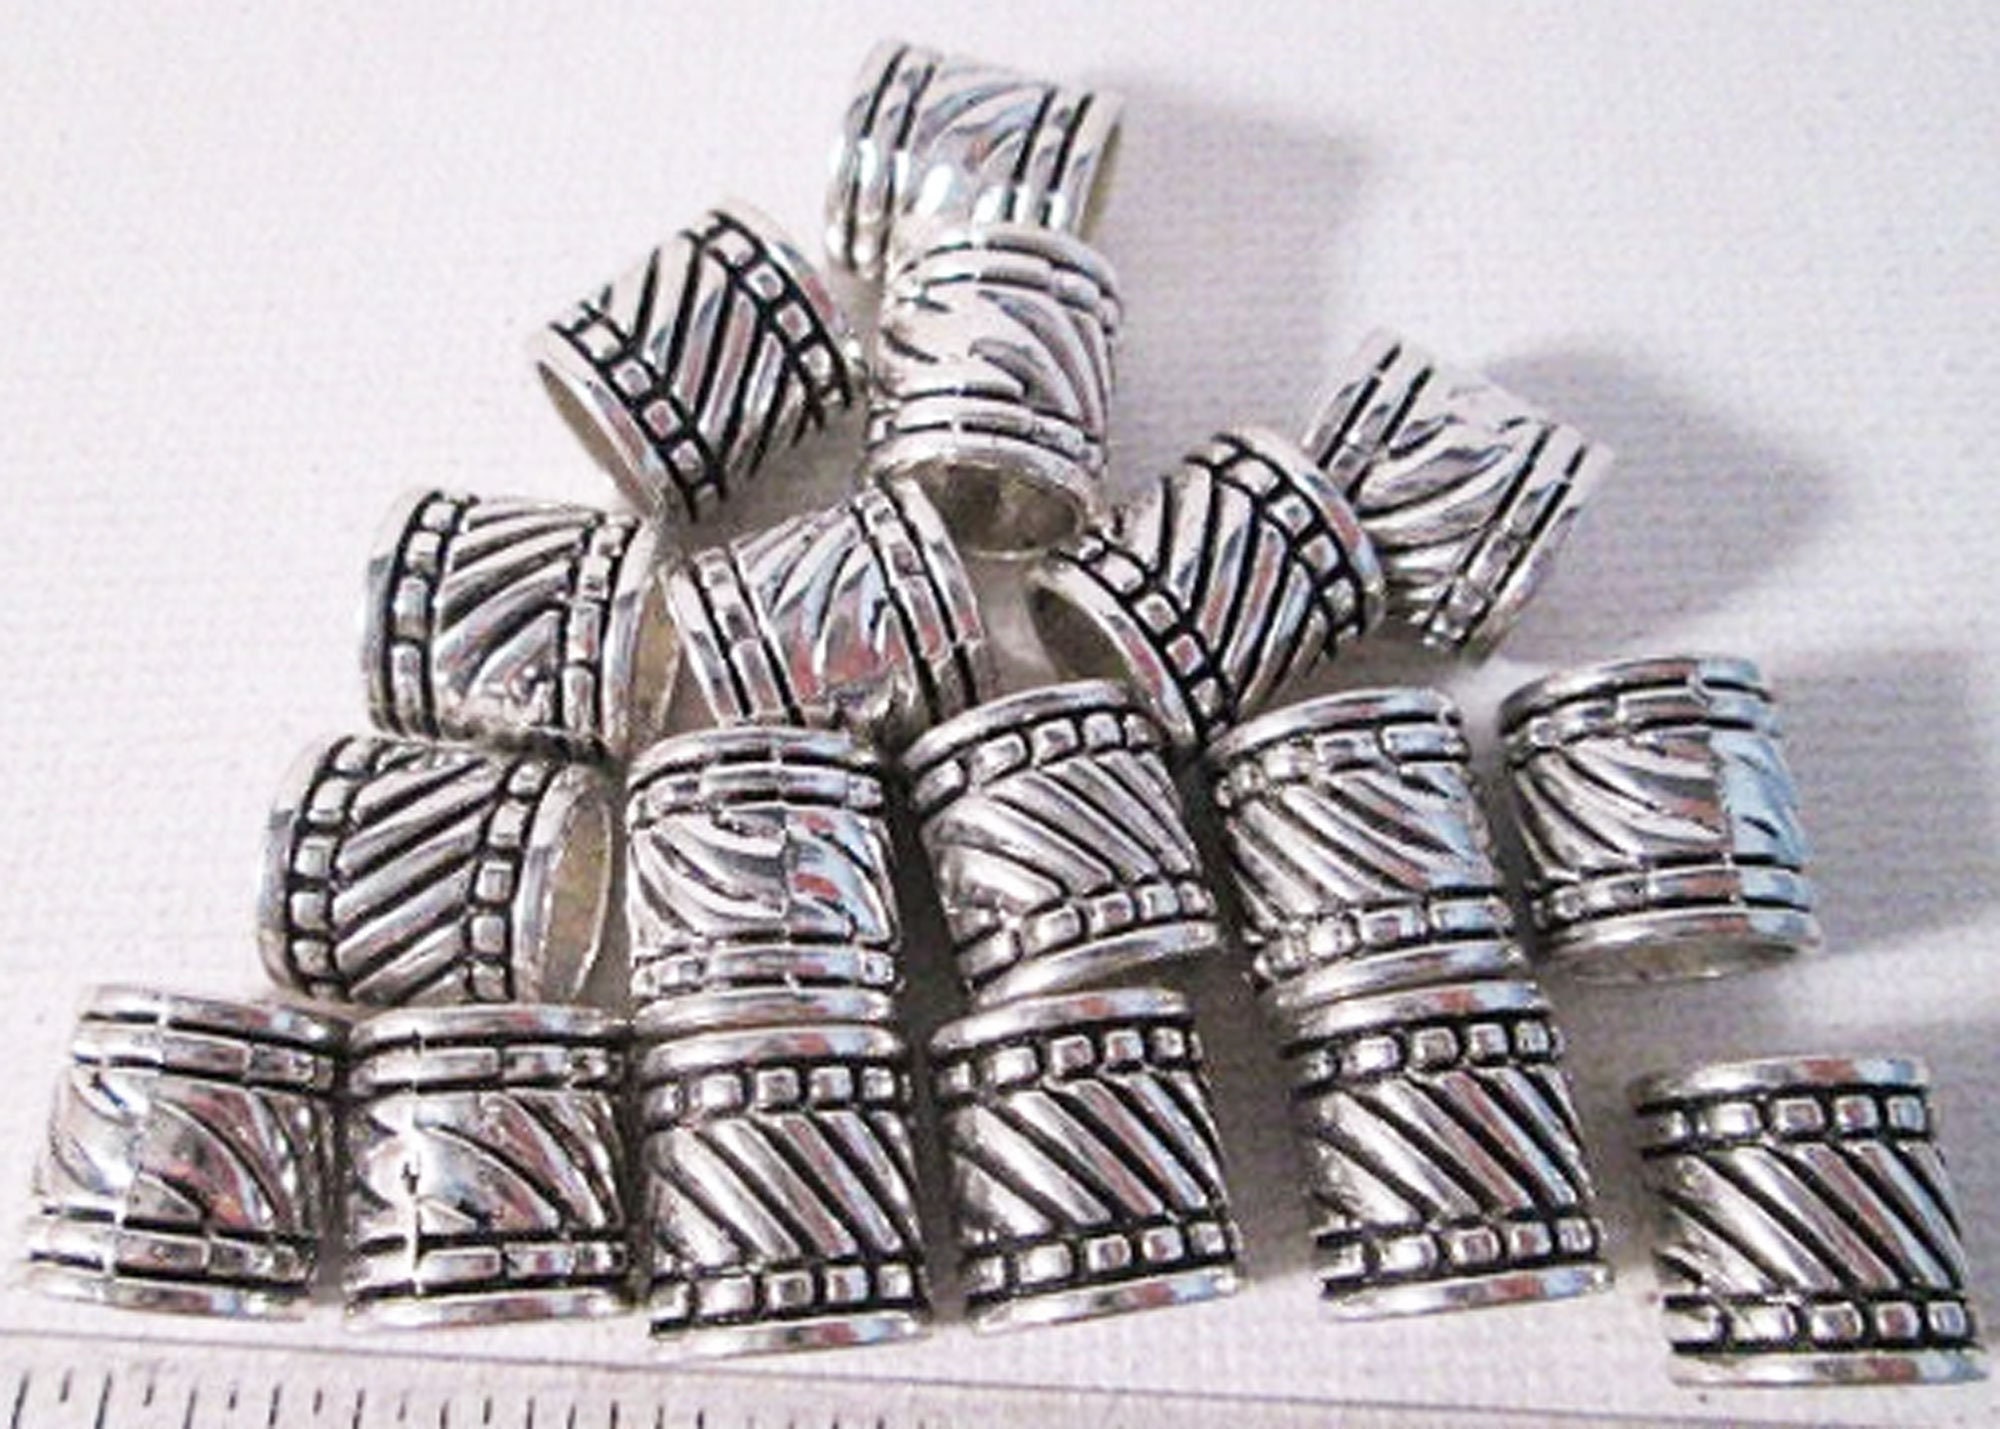 25 or 50 Pcs - 6mm Tibetan Silver Column Spacer Beads - Tube Beads - Silver  Column Beads - Metal Spacer Beads - Jewelry Supplies